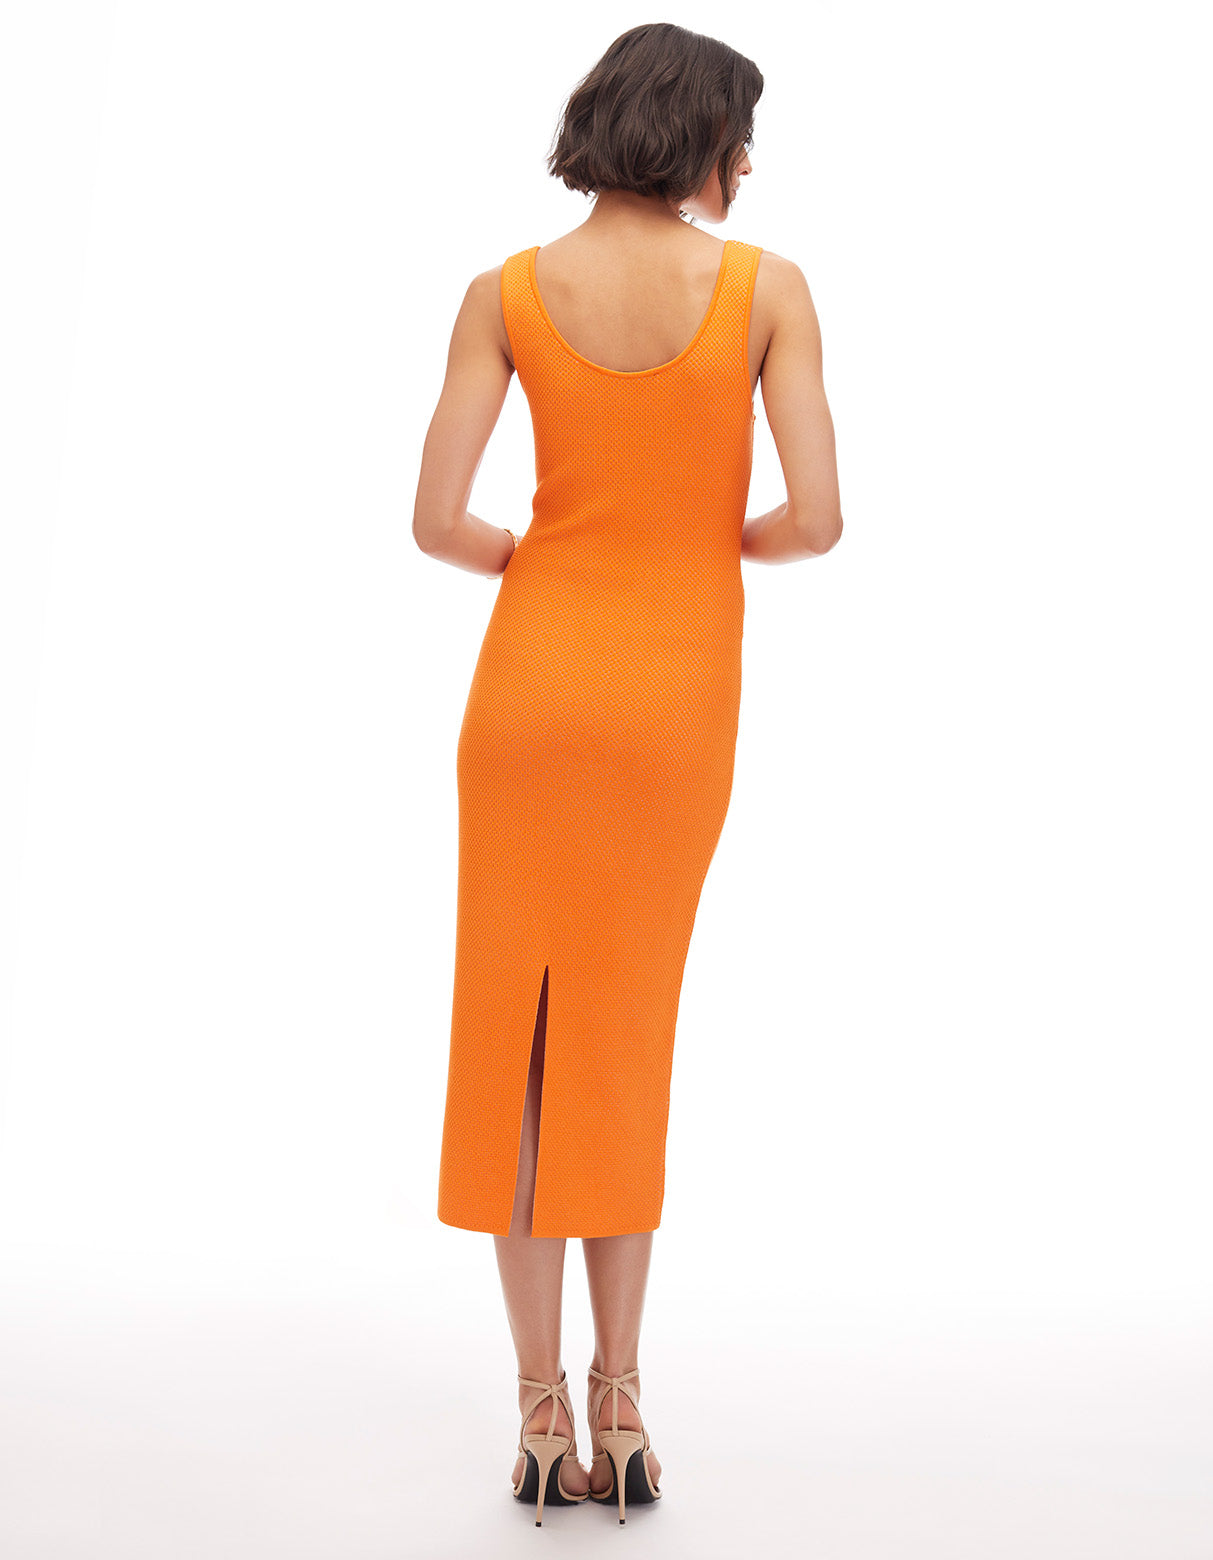 lucy scoop neck tie front bodycon midi dress orange white - figure flattering cruise wear summer dresses for women